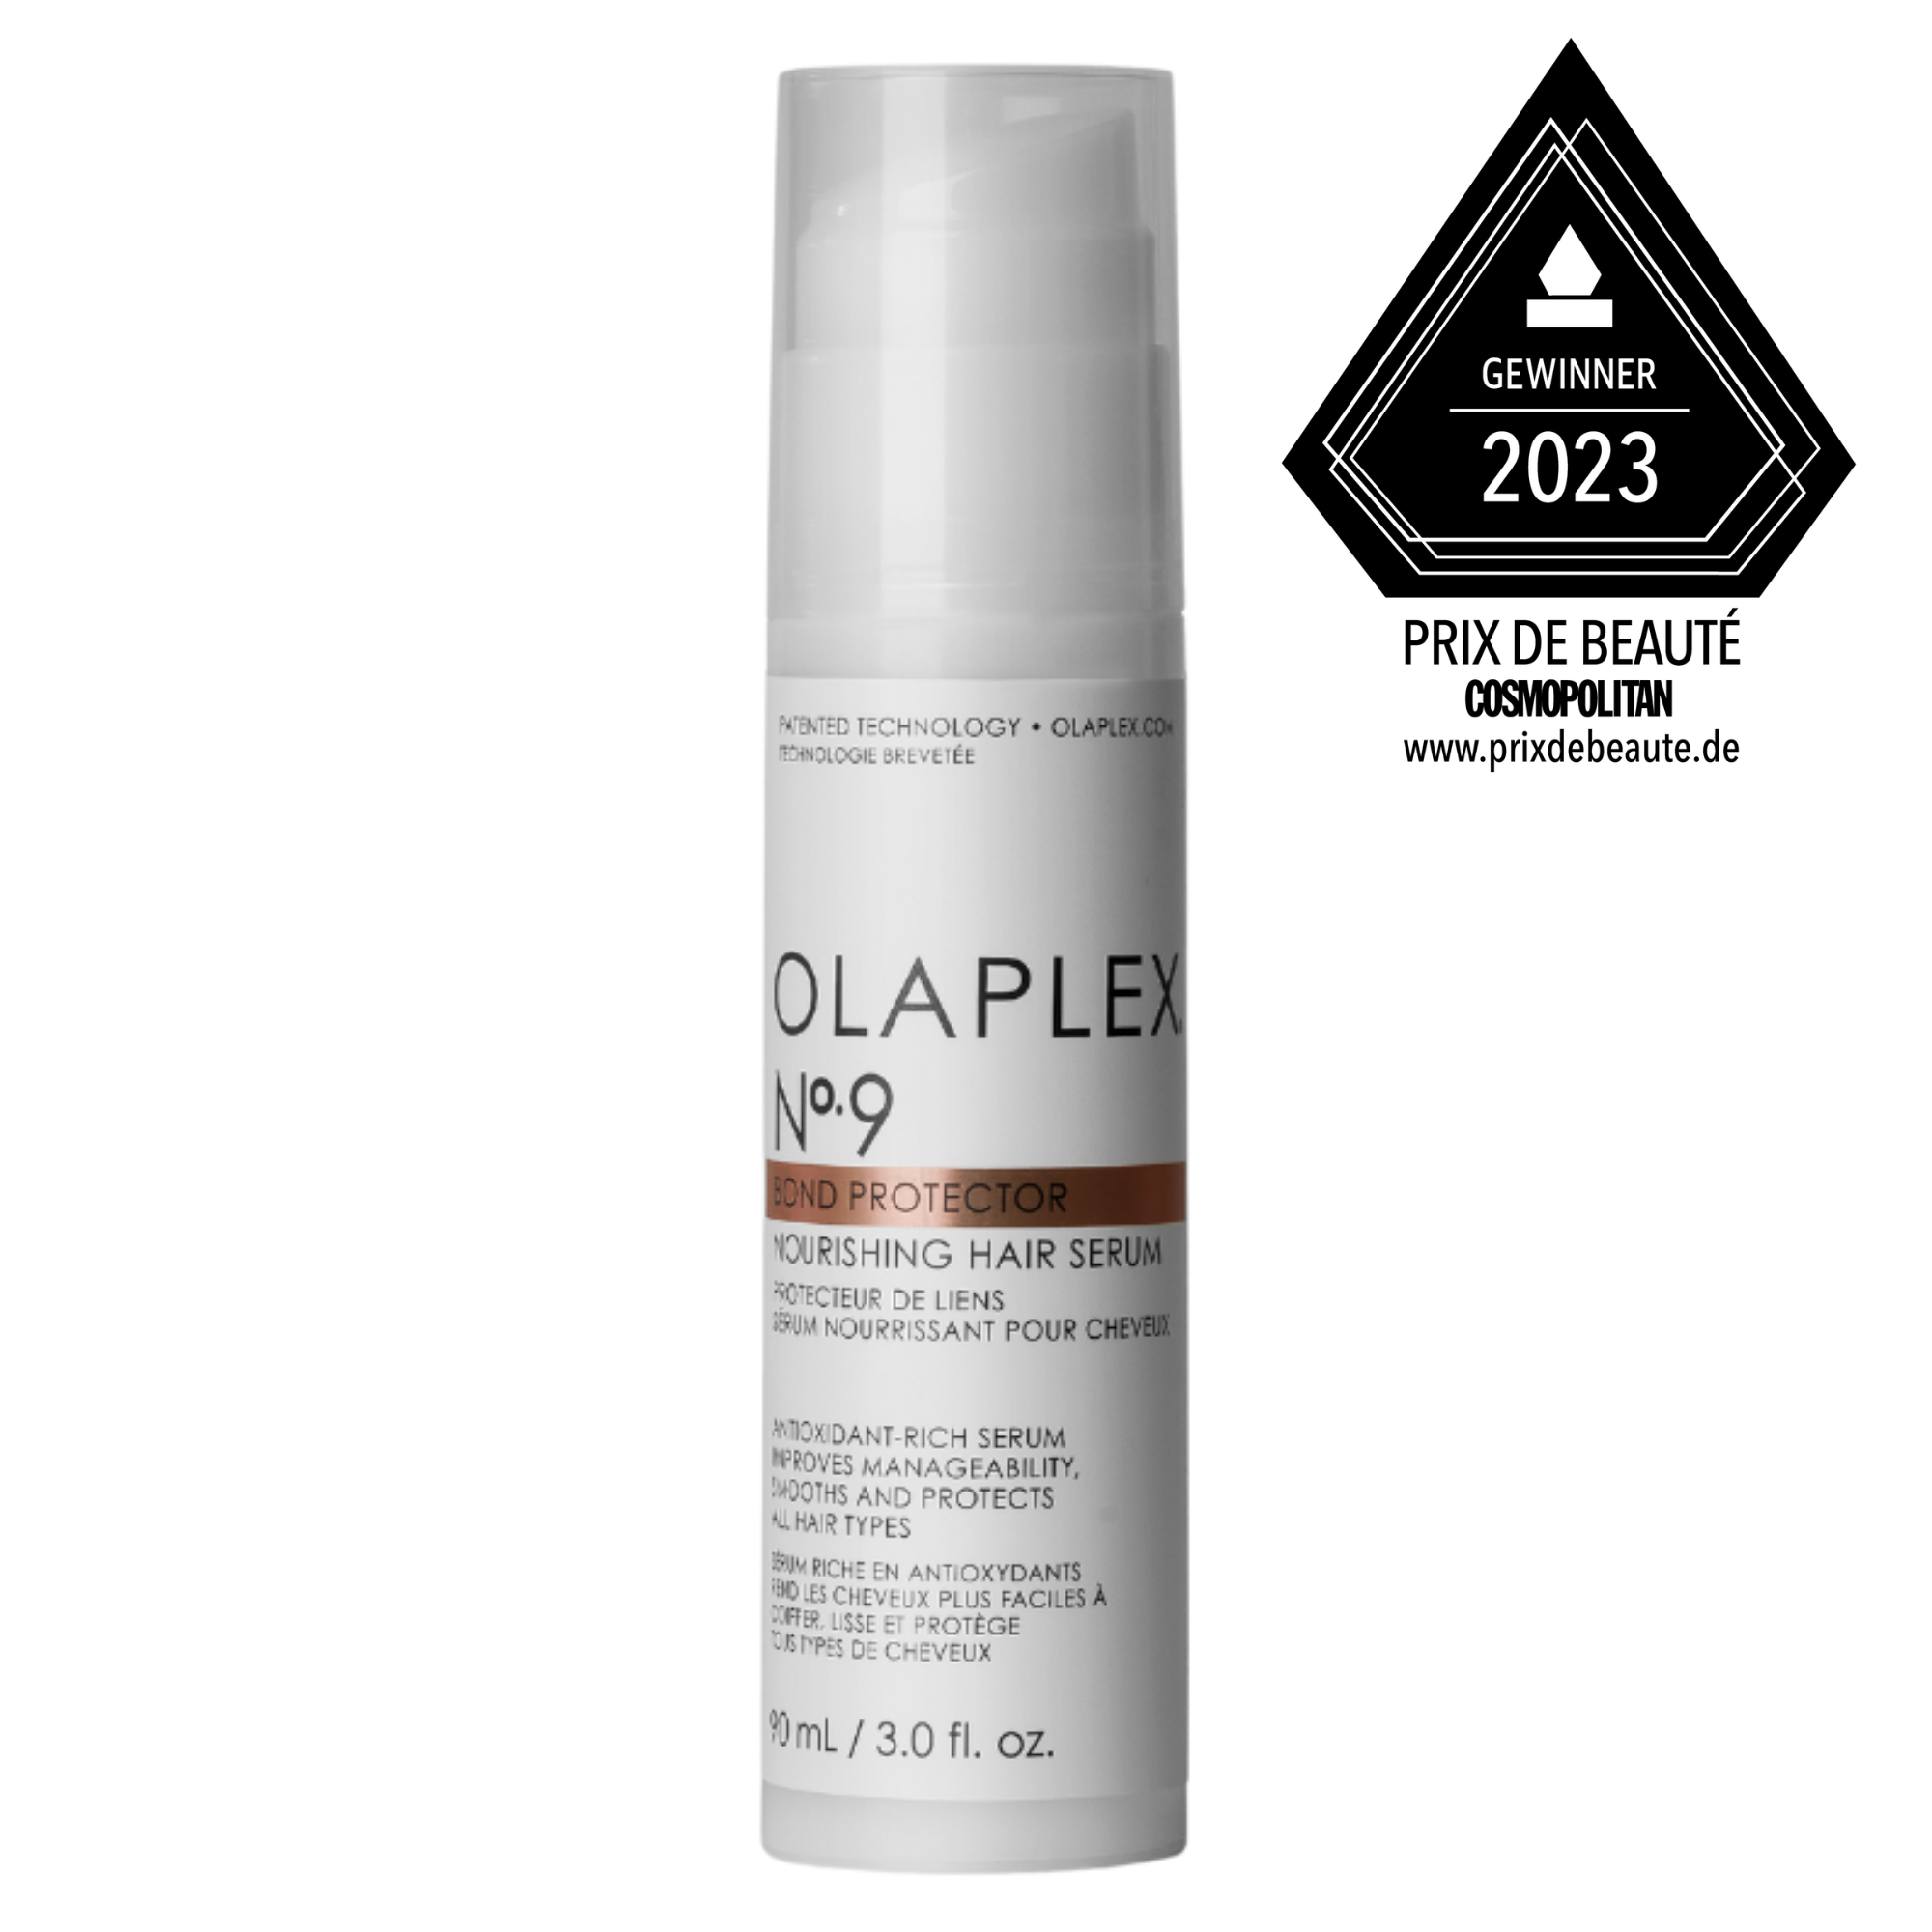 Original OLAPLEX® N° 9 Bond Protector Nourishing Hair Serum grid image